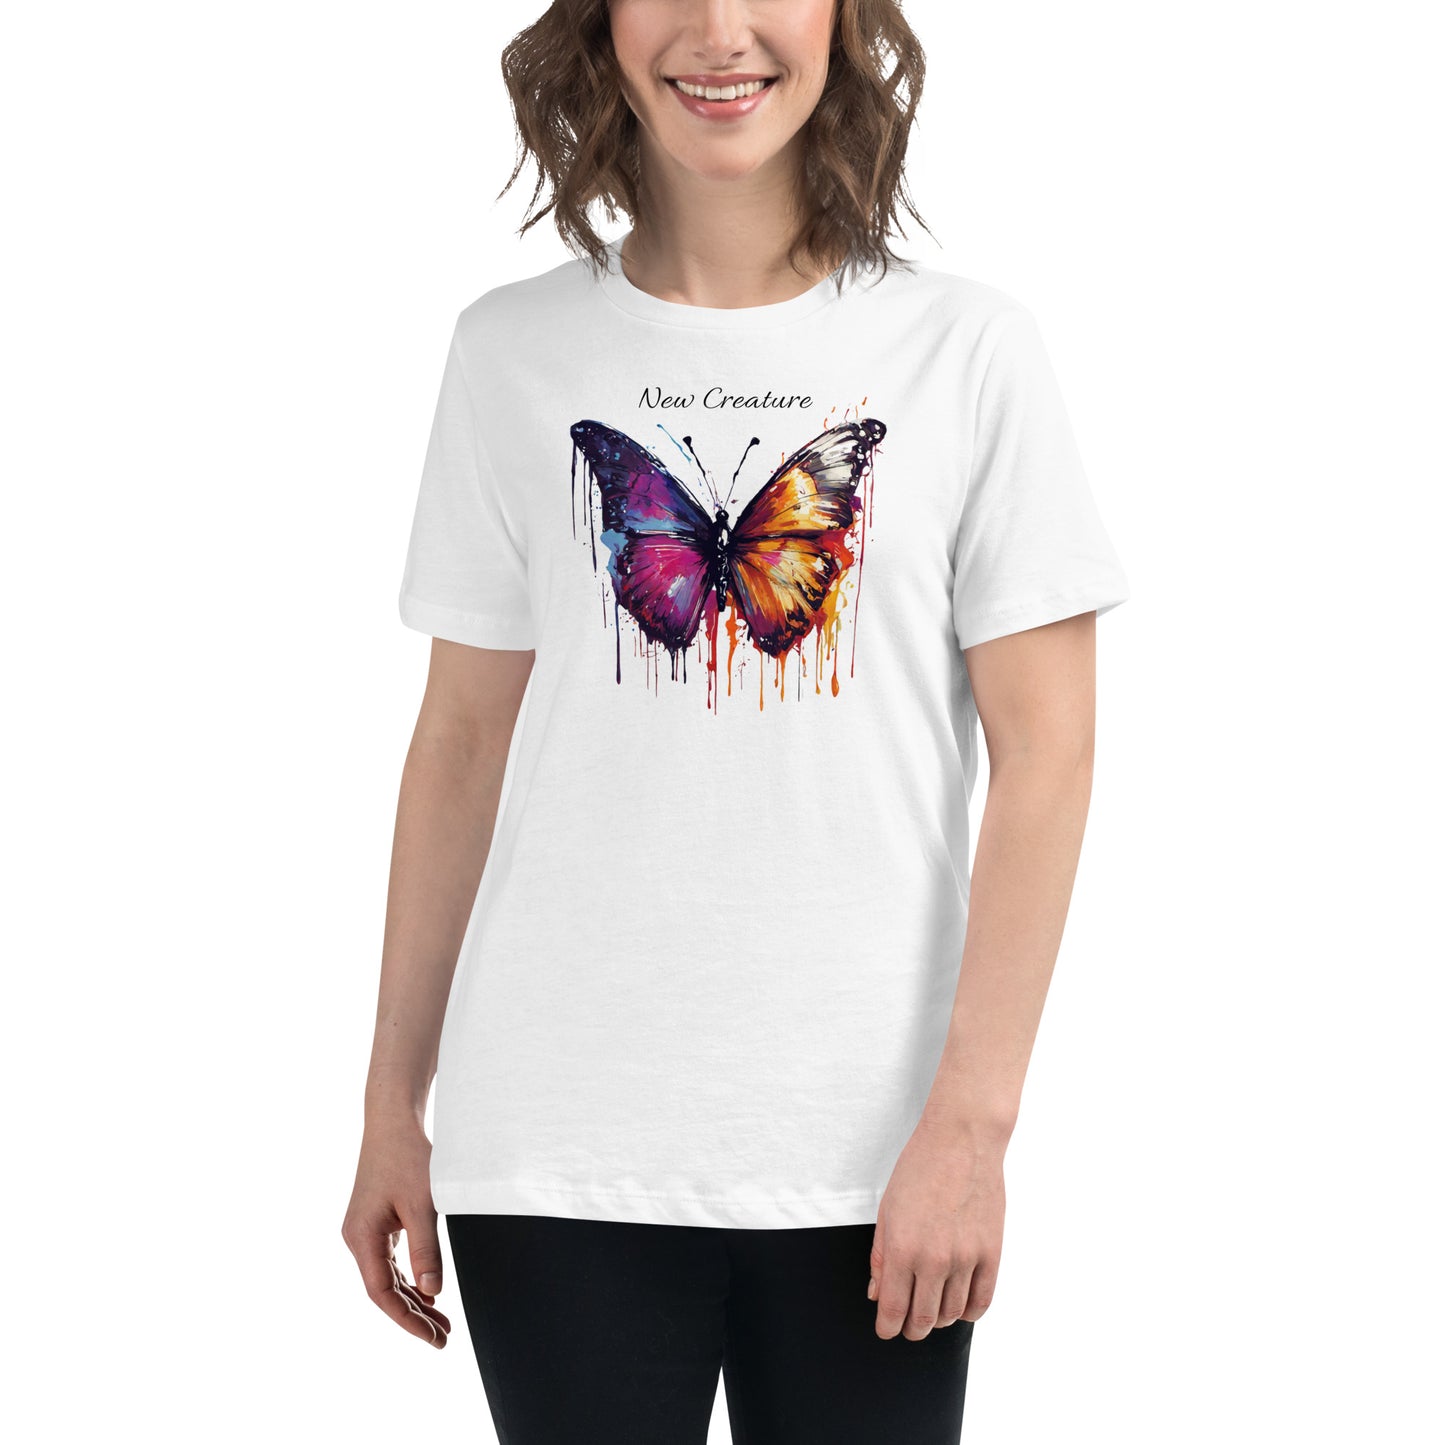 New Creature Christian Women's Beautiful Graphic T-Shirt